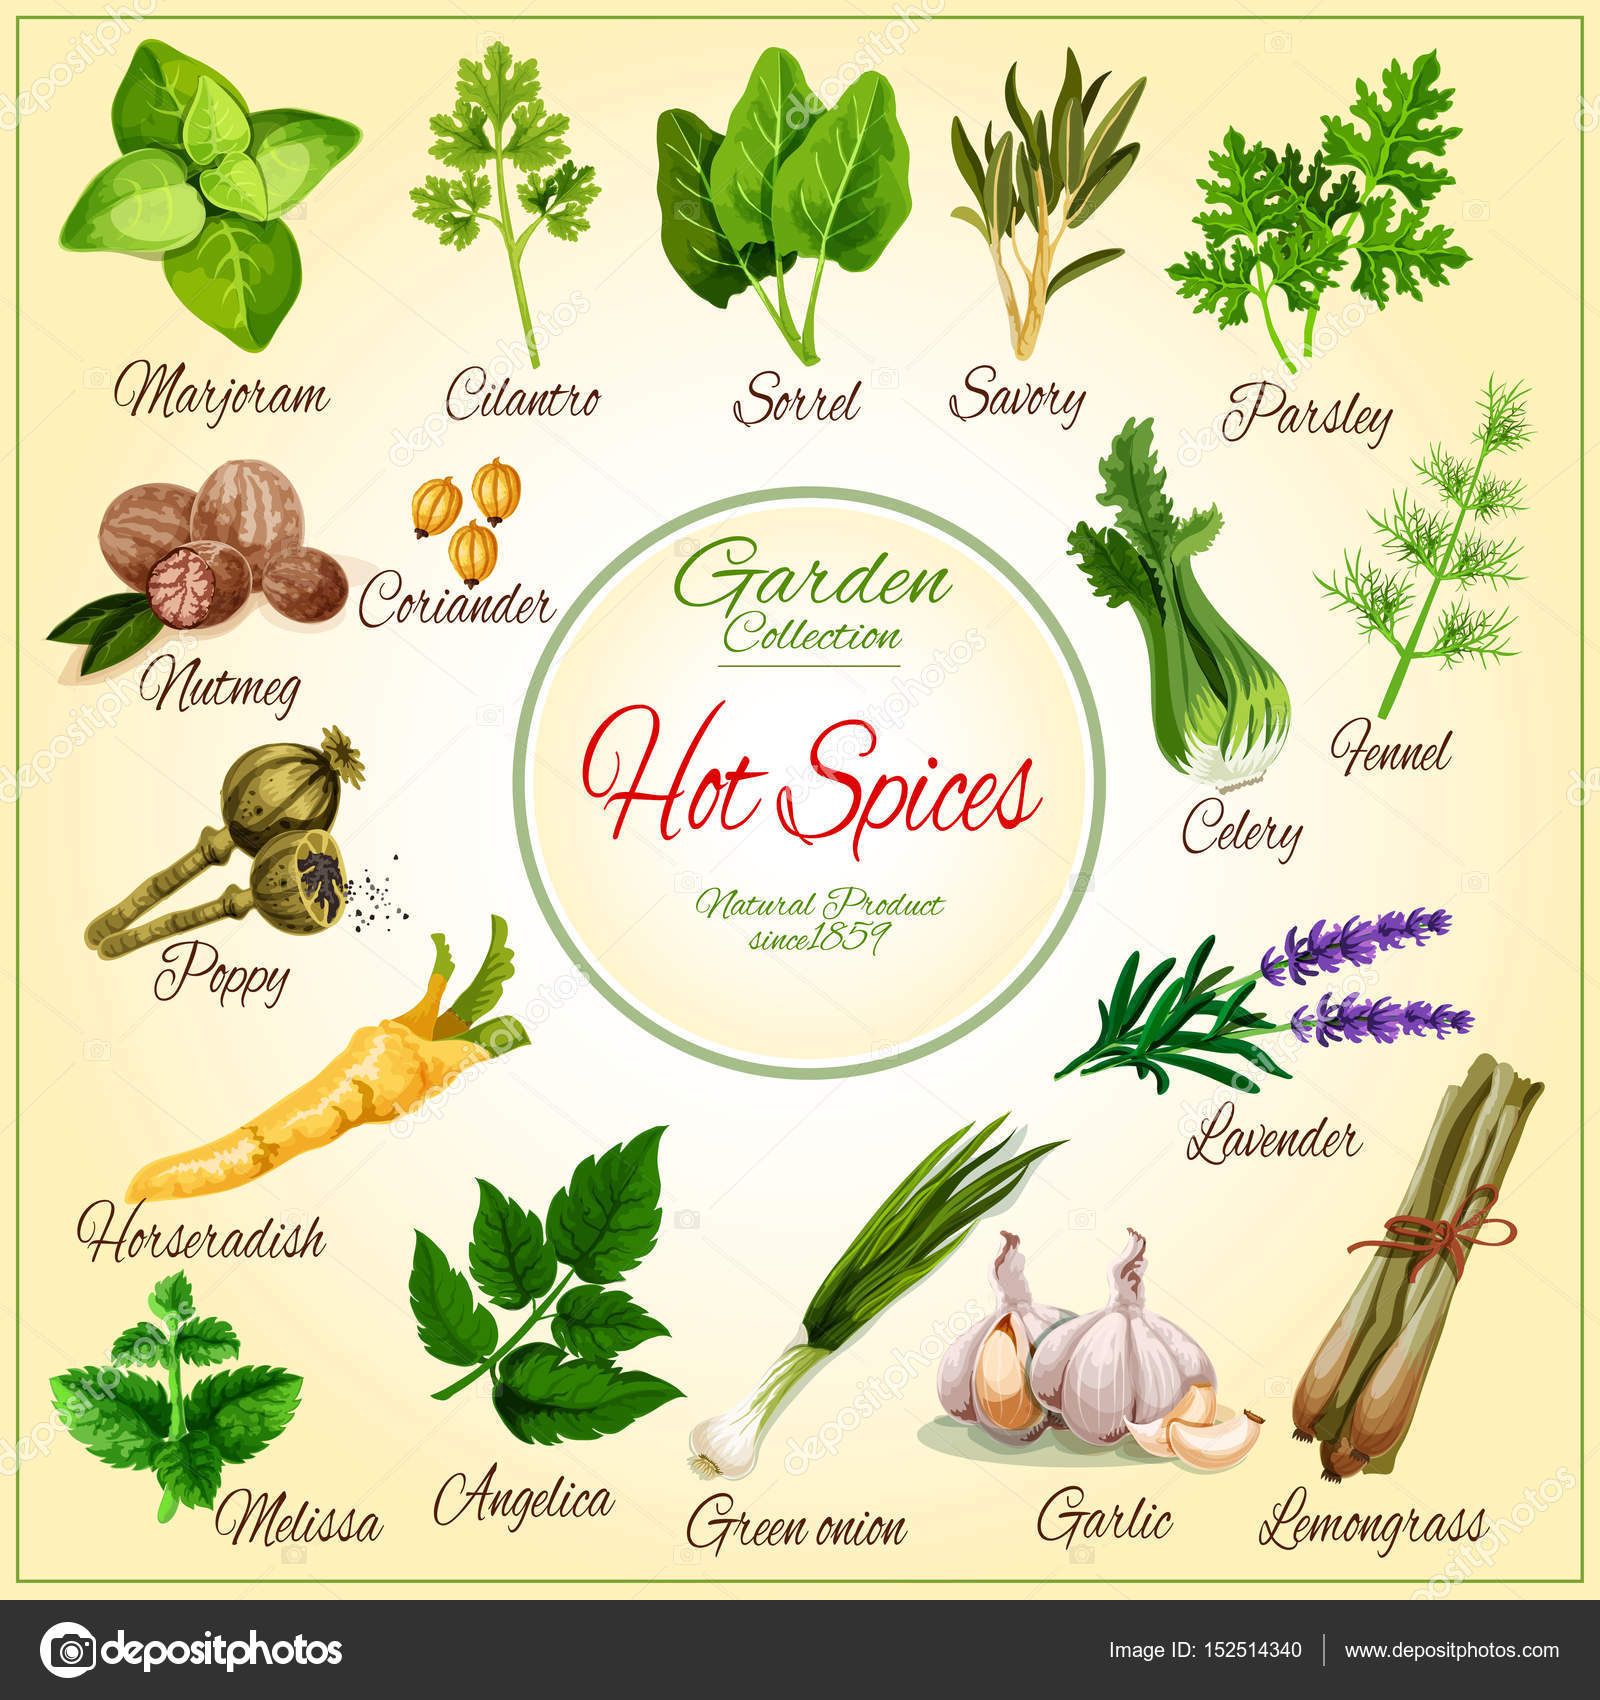 https://st3.depositphotos.com/1020070/15251/v/1600/depositphotos_152514340-stock-illustration-vector-poster-of-spice-seasonings.jpg